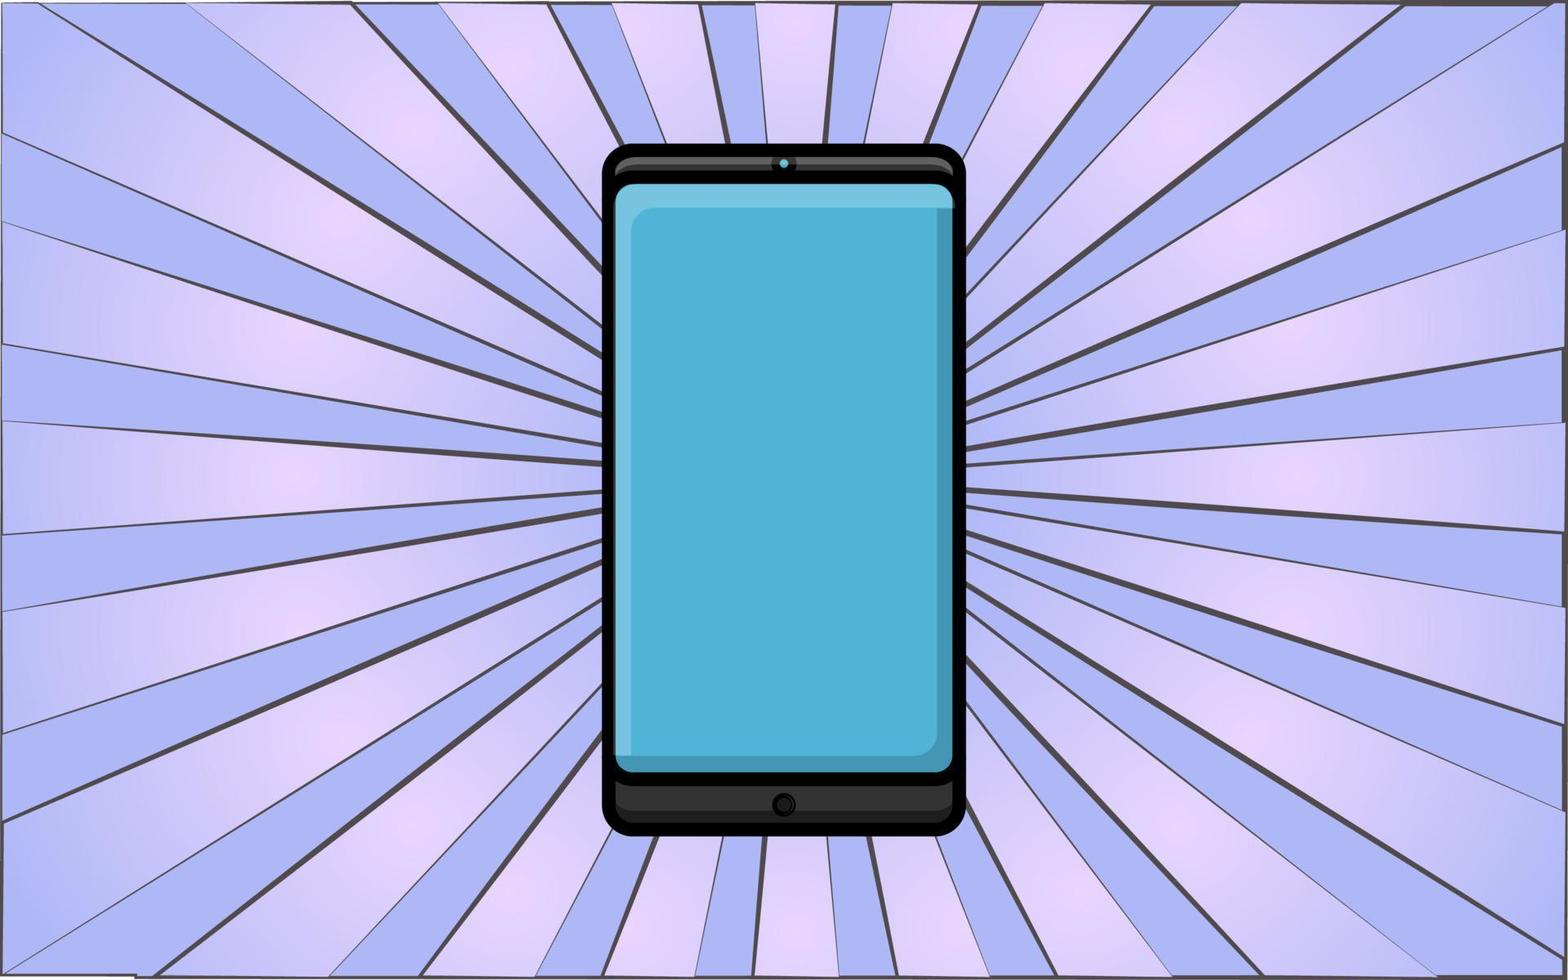 moderno teléfono móvil digital teléfono inteligente sobre fondo de rayos azules abstractos. ilustración vectorial vector